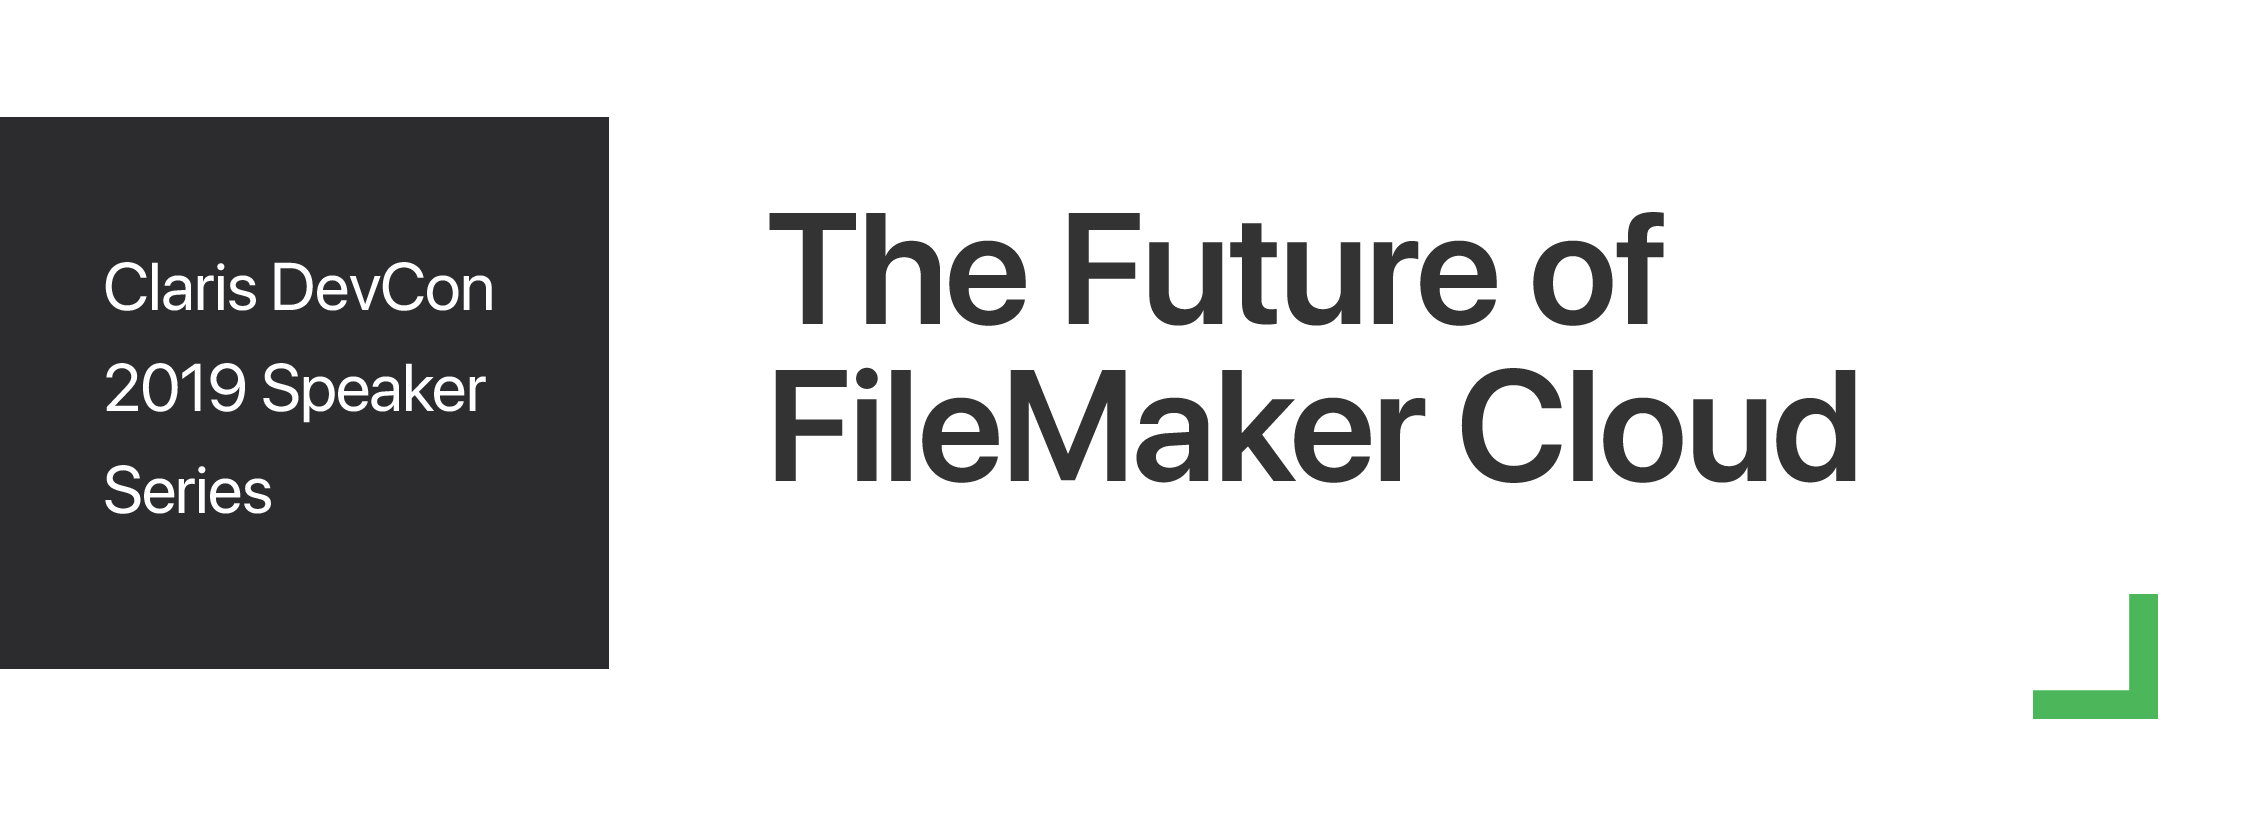 Claris DevCon 2019 Speaker Series - The Future of FileMaker Cloud eBook